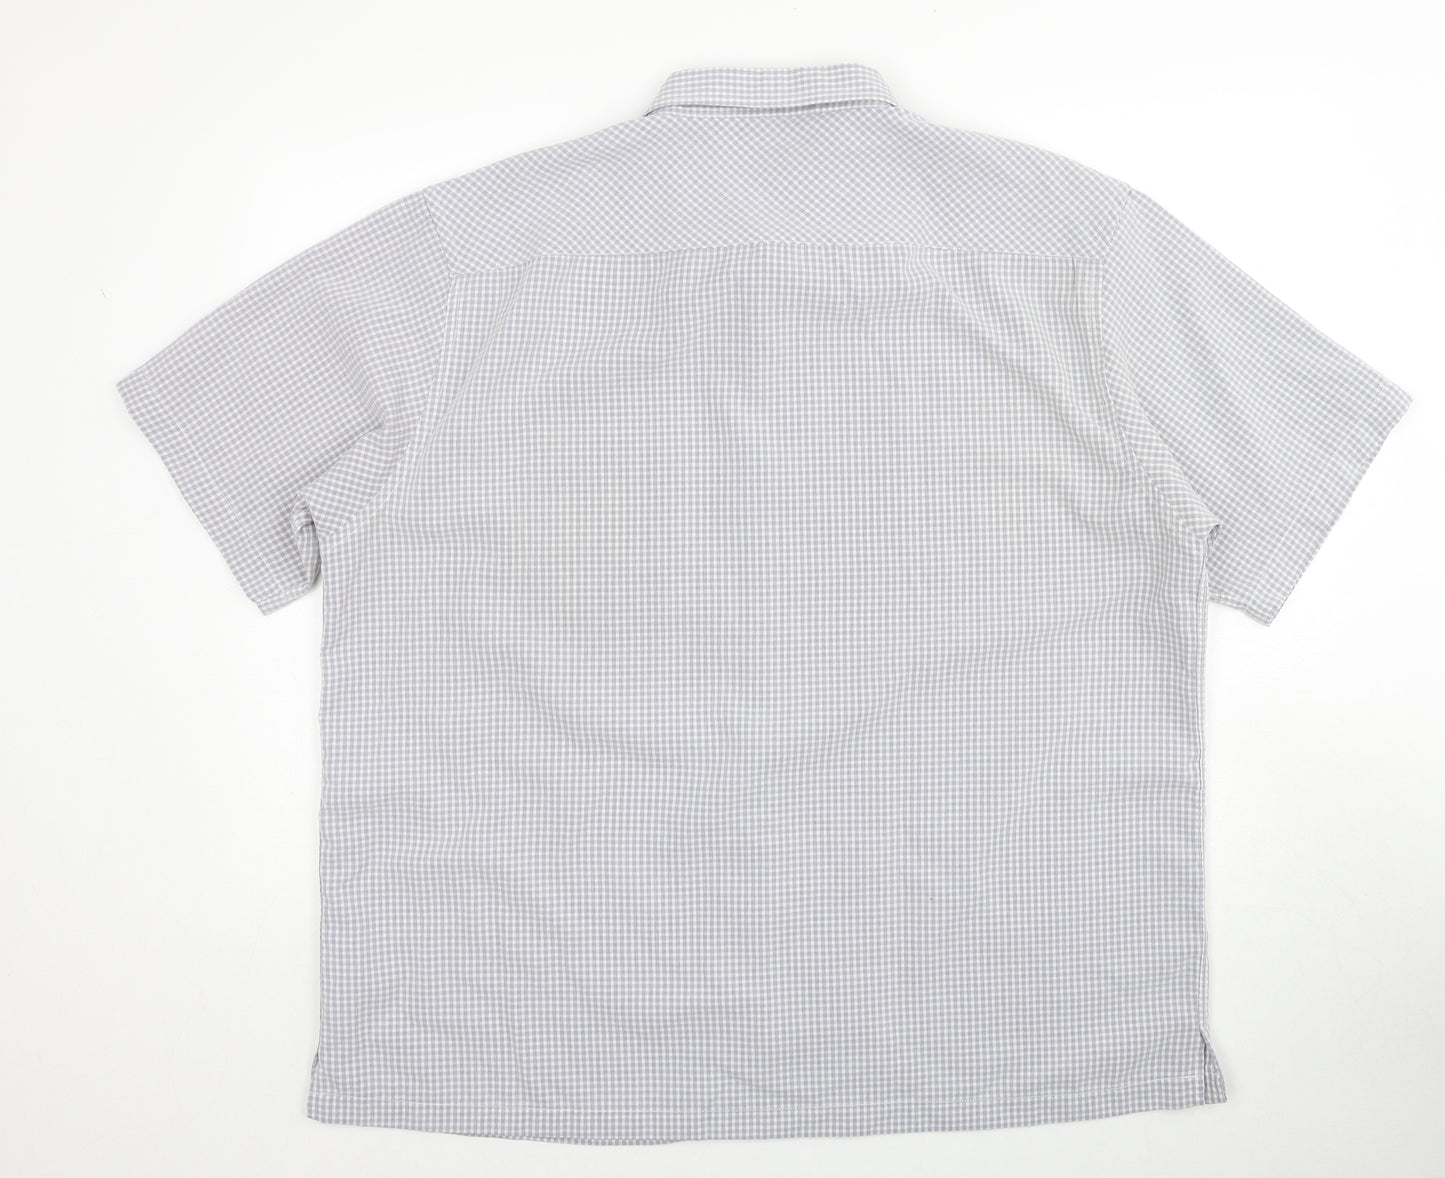 UrbanSpirit Mens Grey Plaid Polyester Button-Up Size 2XL Collared Button